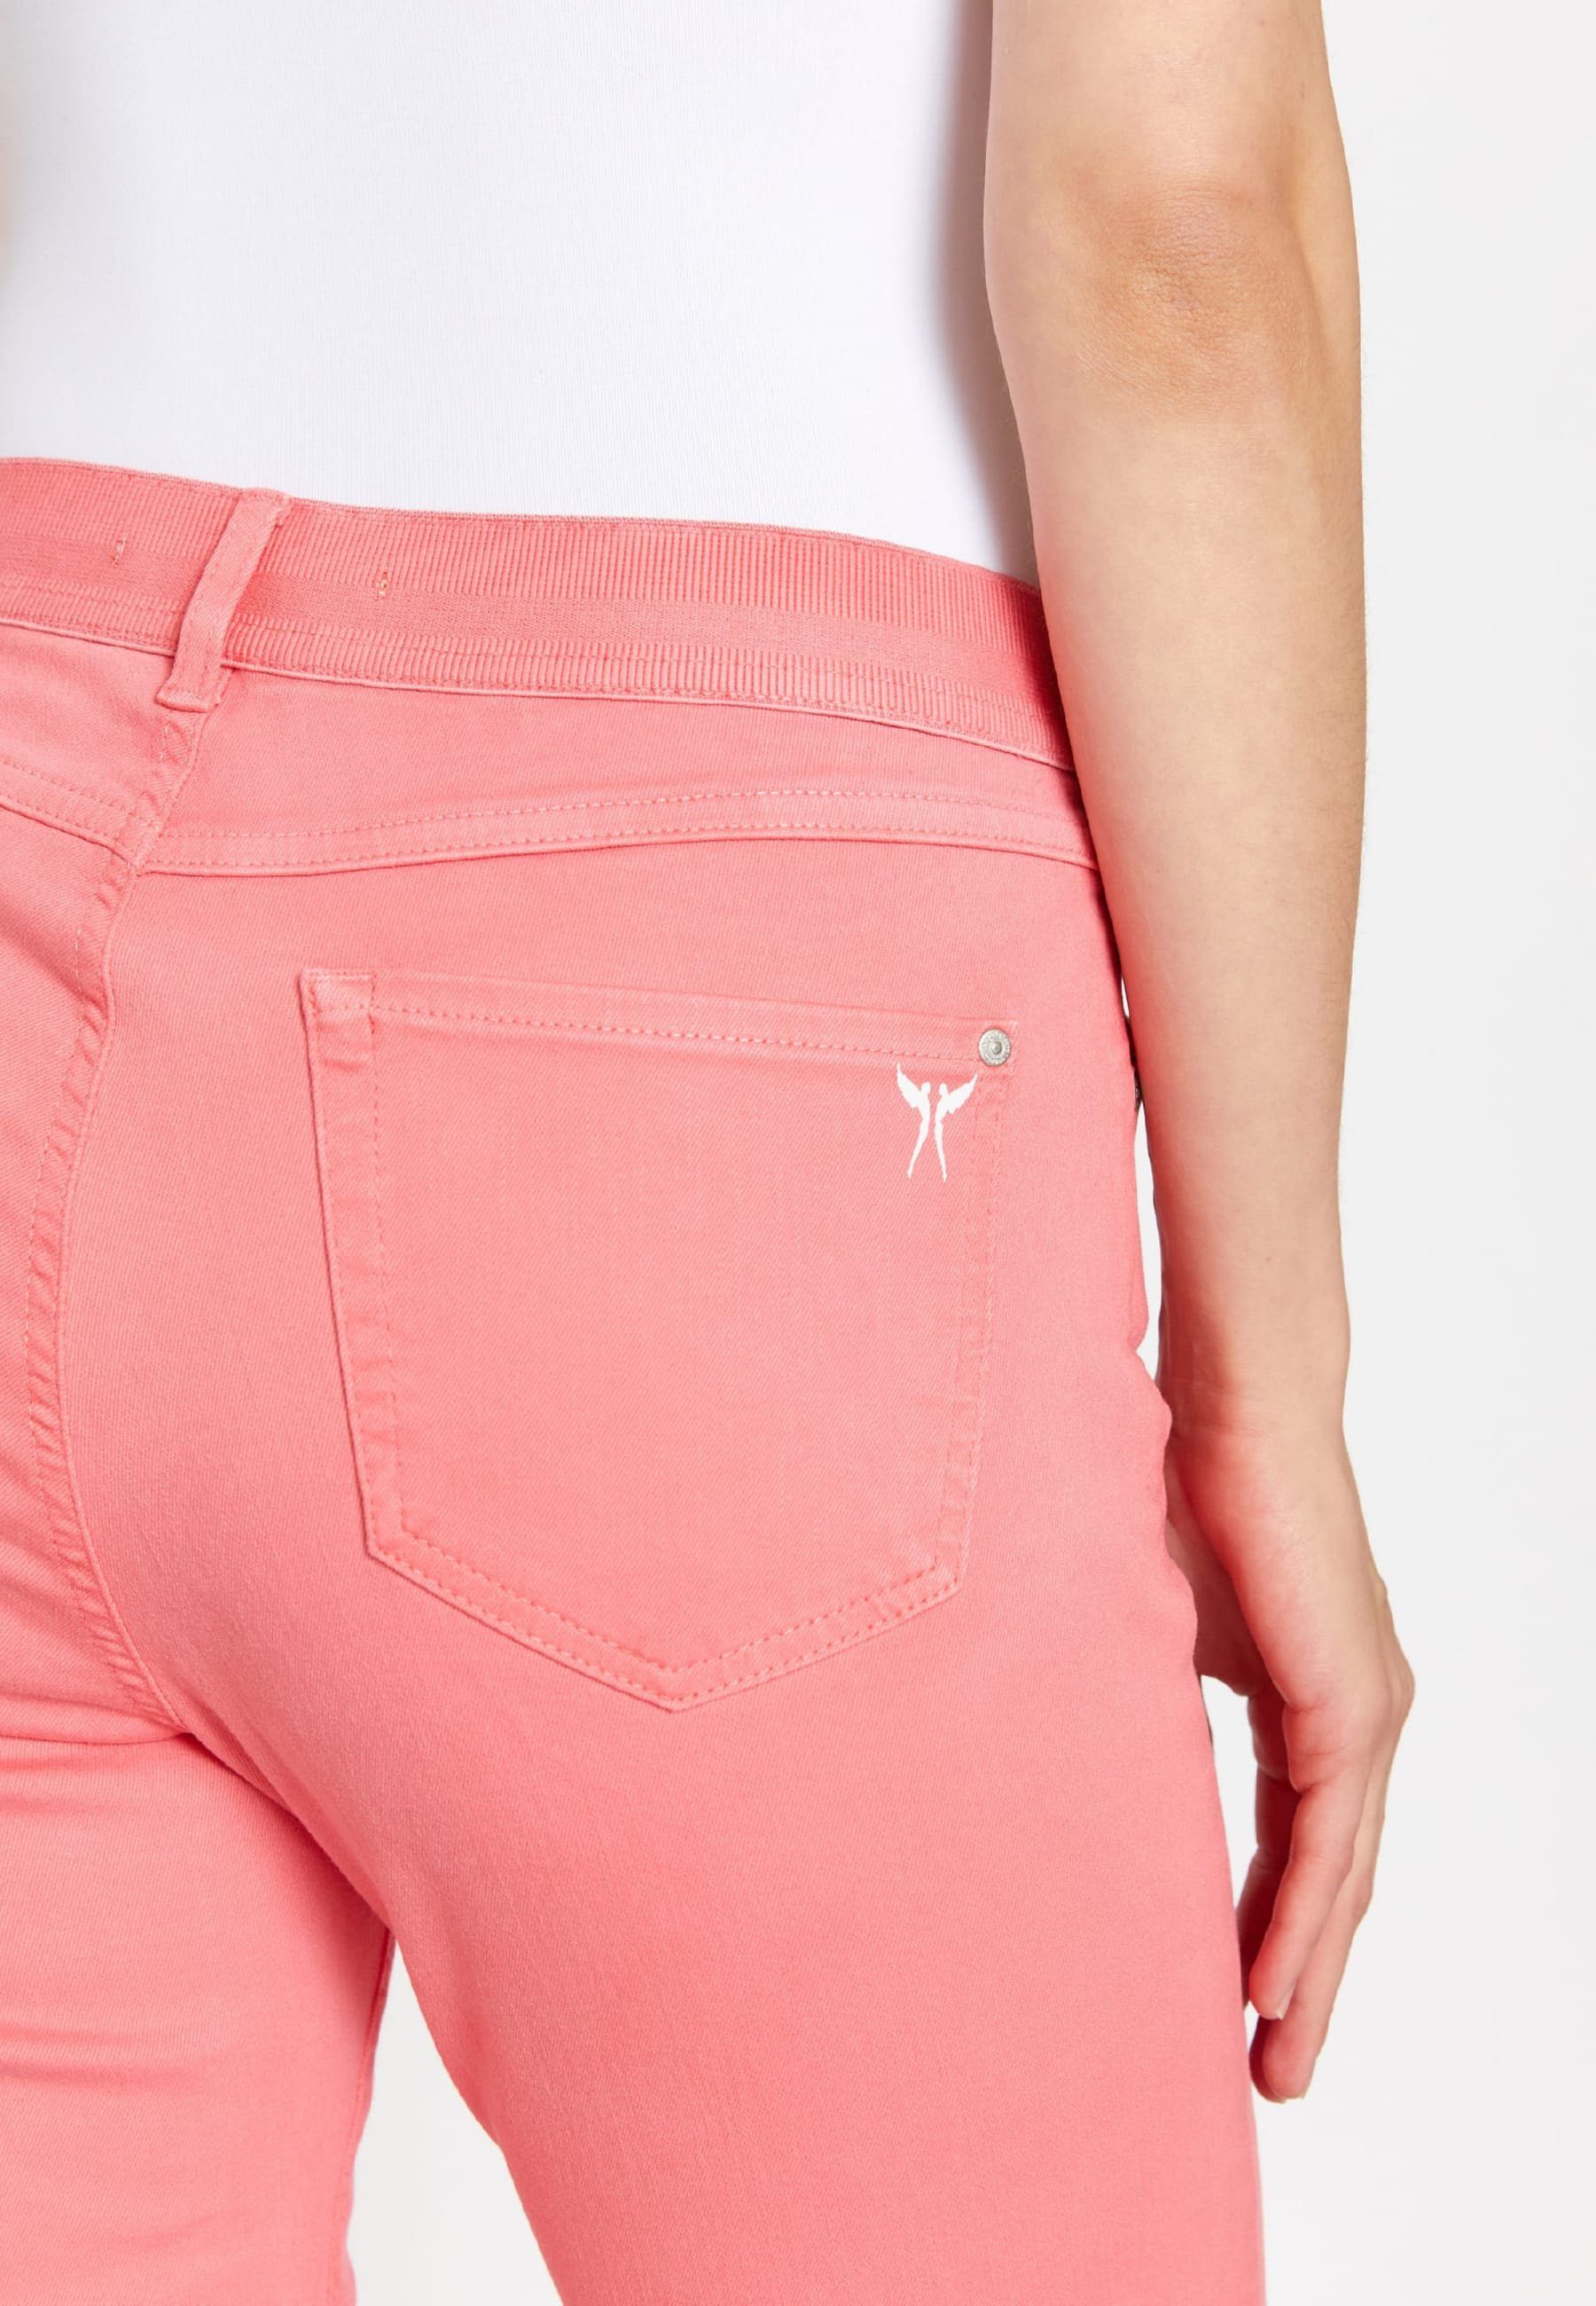 Coloured mit pink mit Crop ANGELS Label-Applikationen Denim Jeans Slim-fit-Jeans OSFA